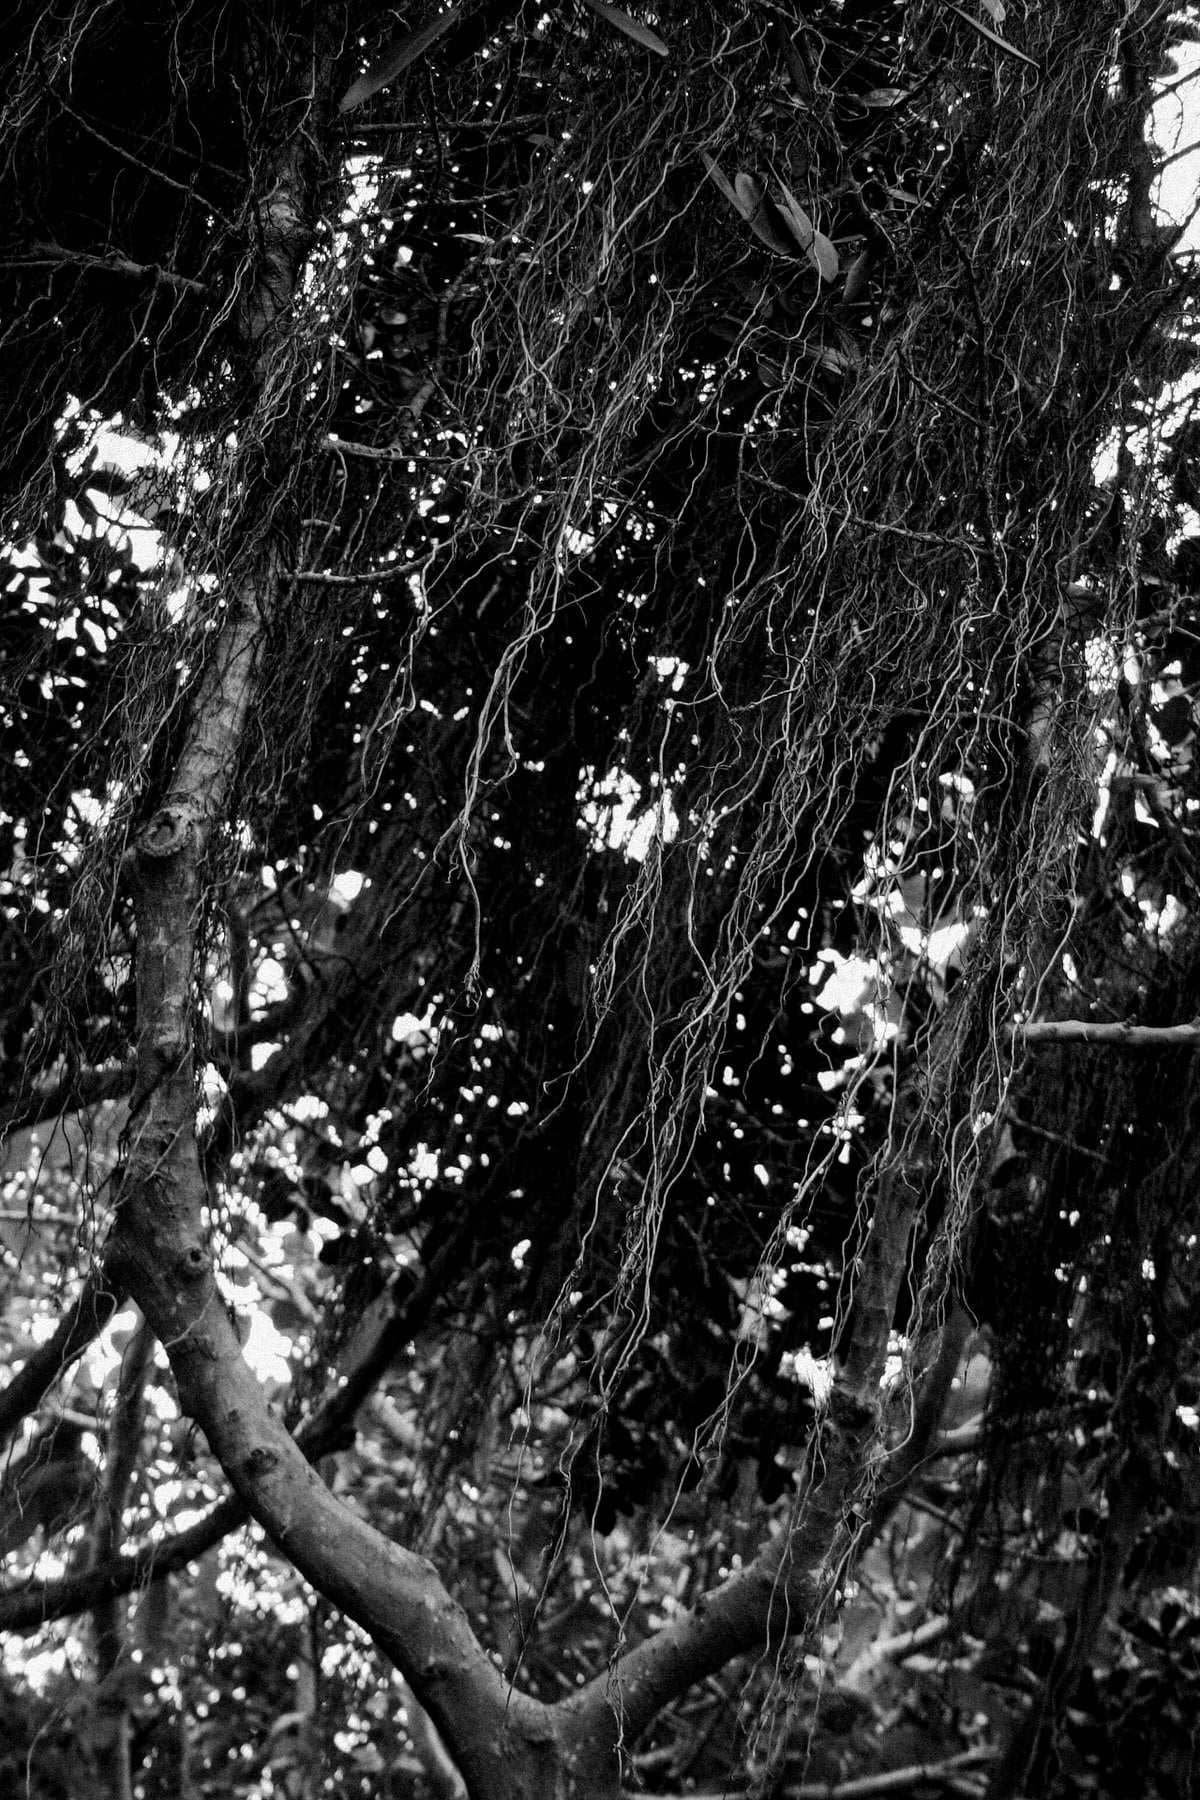 San-Diego-Zoo-San-Diego-California-black-and-white-fine-art-photography-by-Studio-L-photographer-Laura-Schneider-_2594